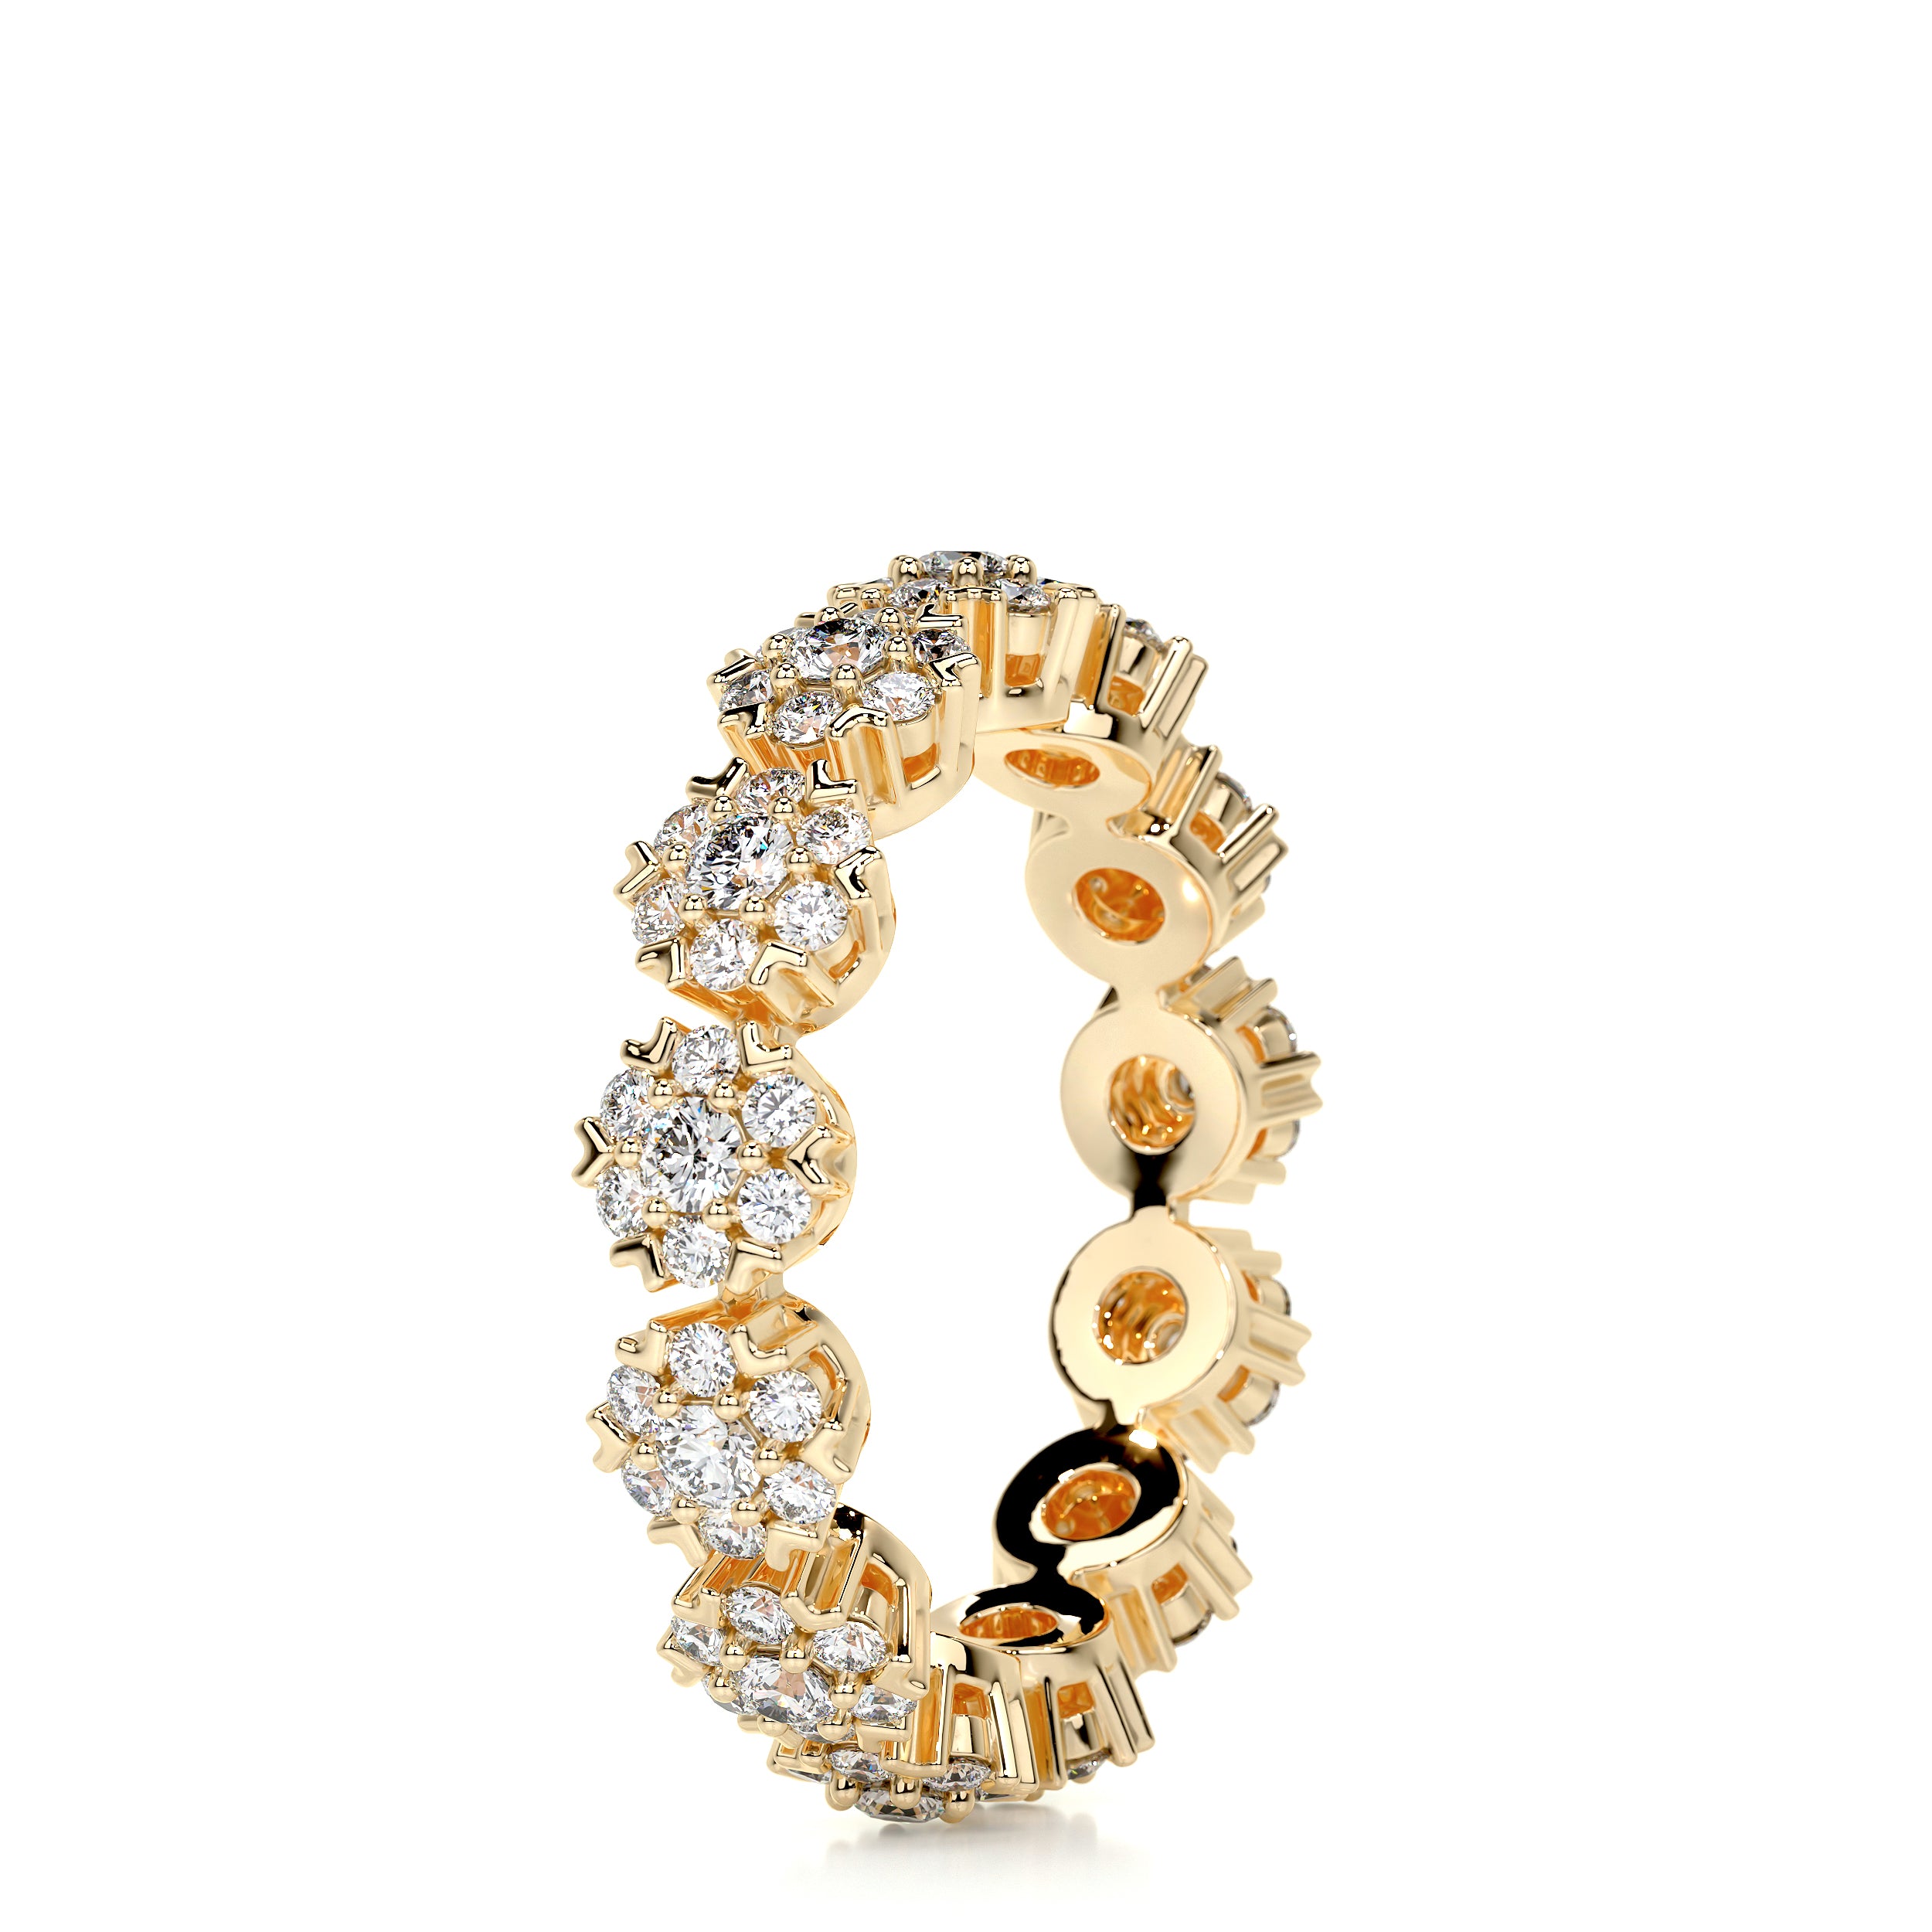 Holly Diamond Wedding Ring   (1 Carat) -18K Yellow Gold